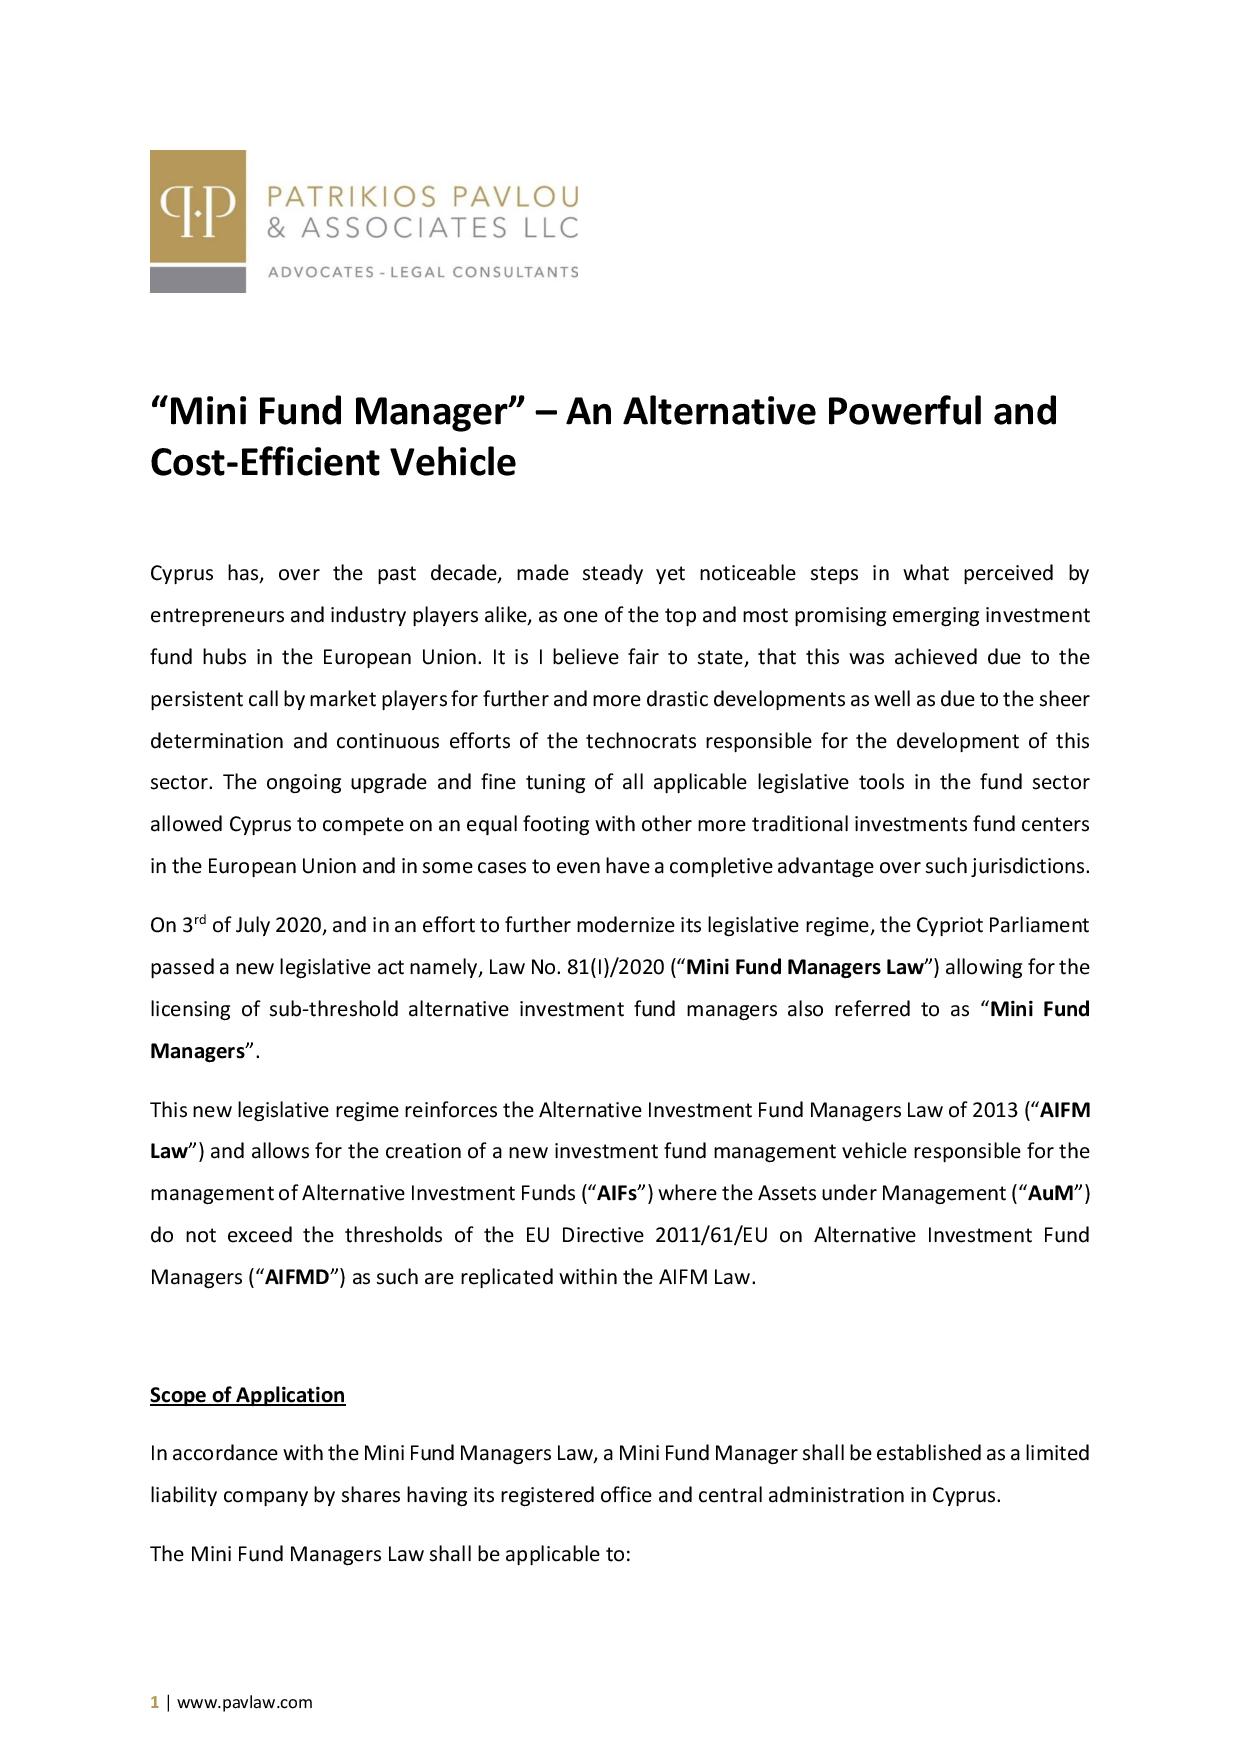 Patrikios Pavlou & Associates LLC: “Mini Fund Manager” – An Alternative Powerful and Cost-Efficient Vehicle